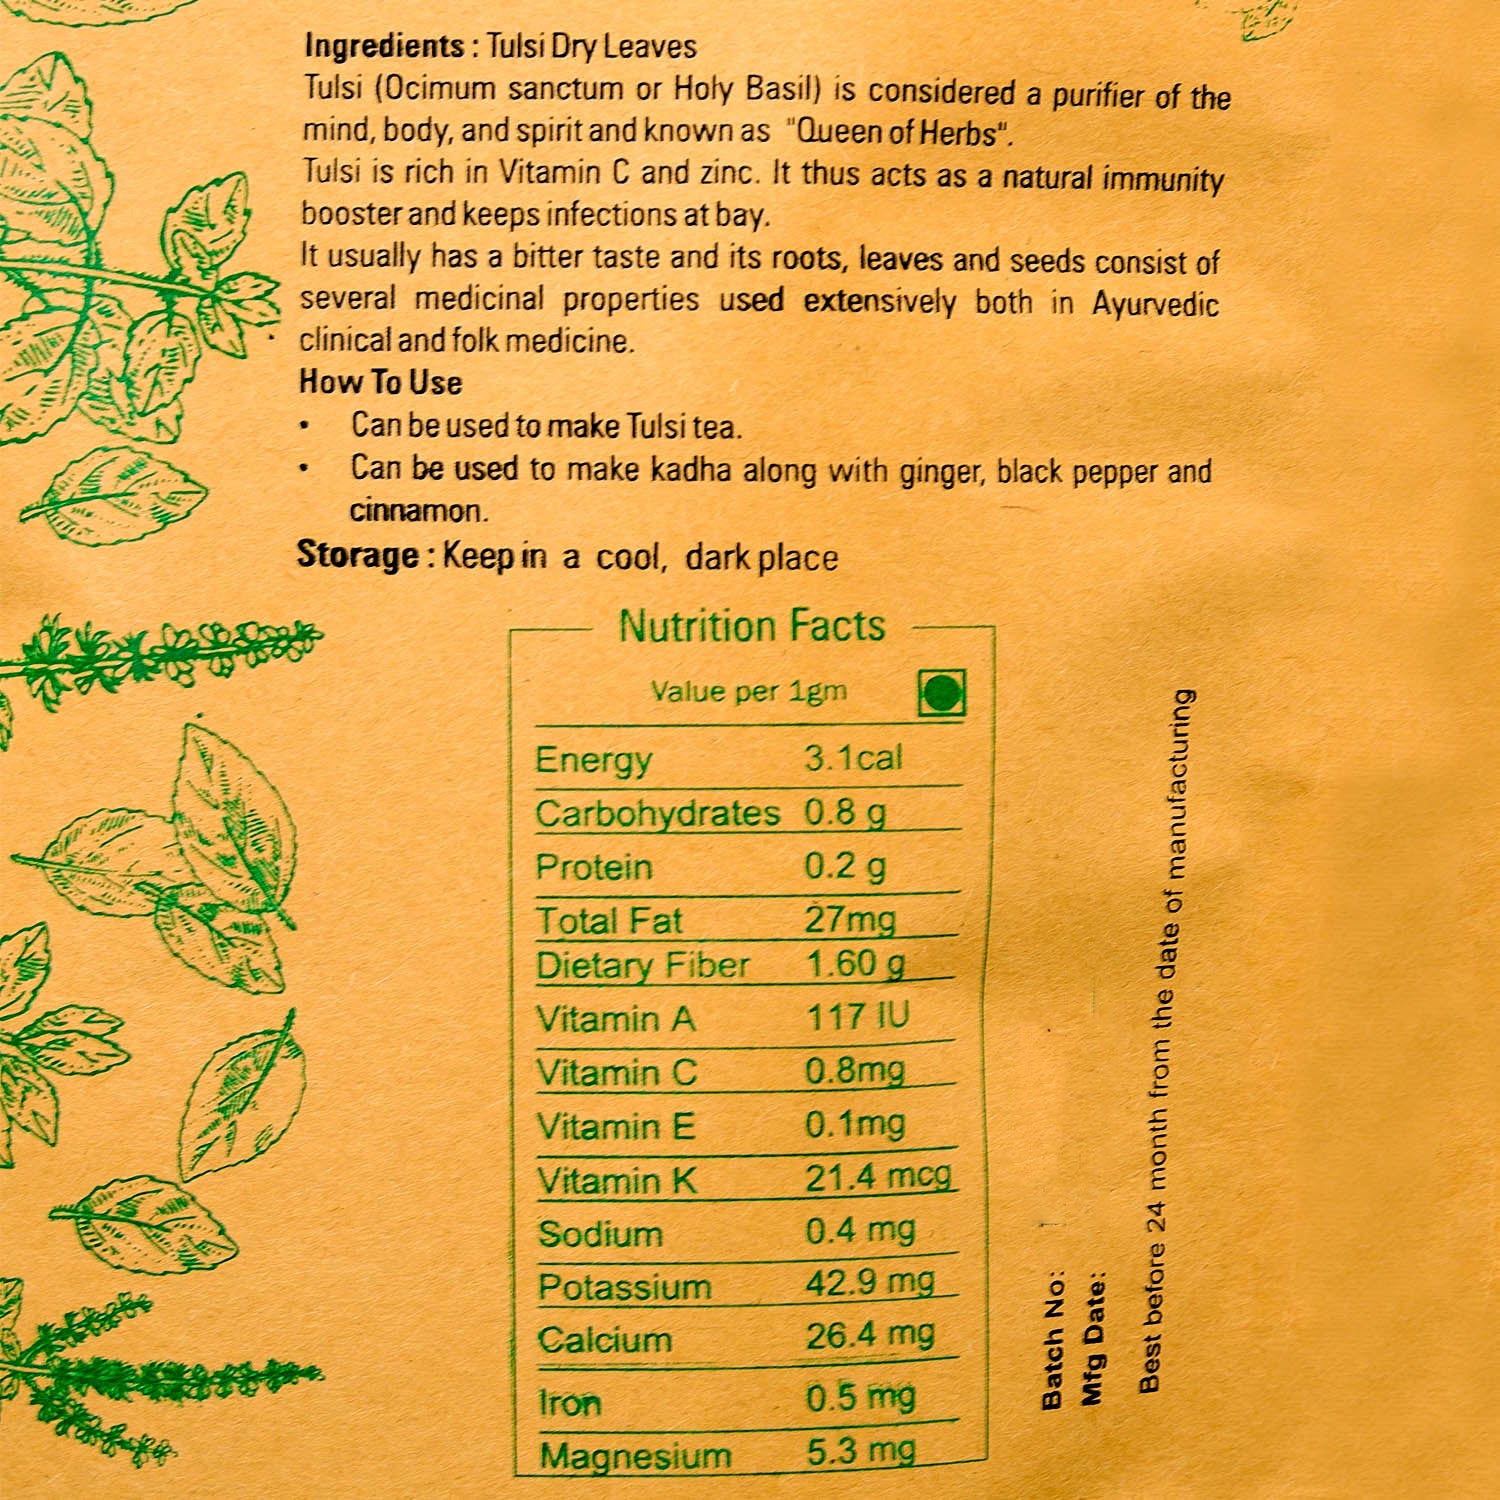 Naturalis Sun Dried Krishna Tulsi (Holy Basil) leaves granules for Tea, Kadha & Cooking - 80gms - Naturalis